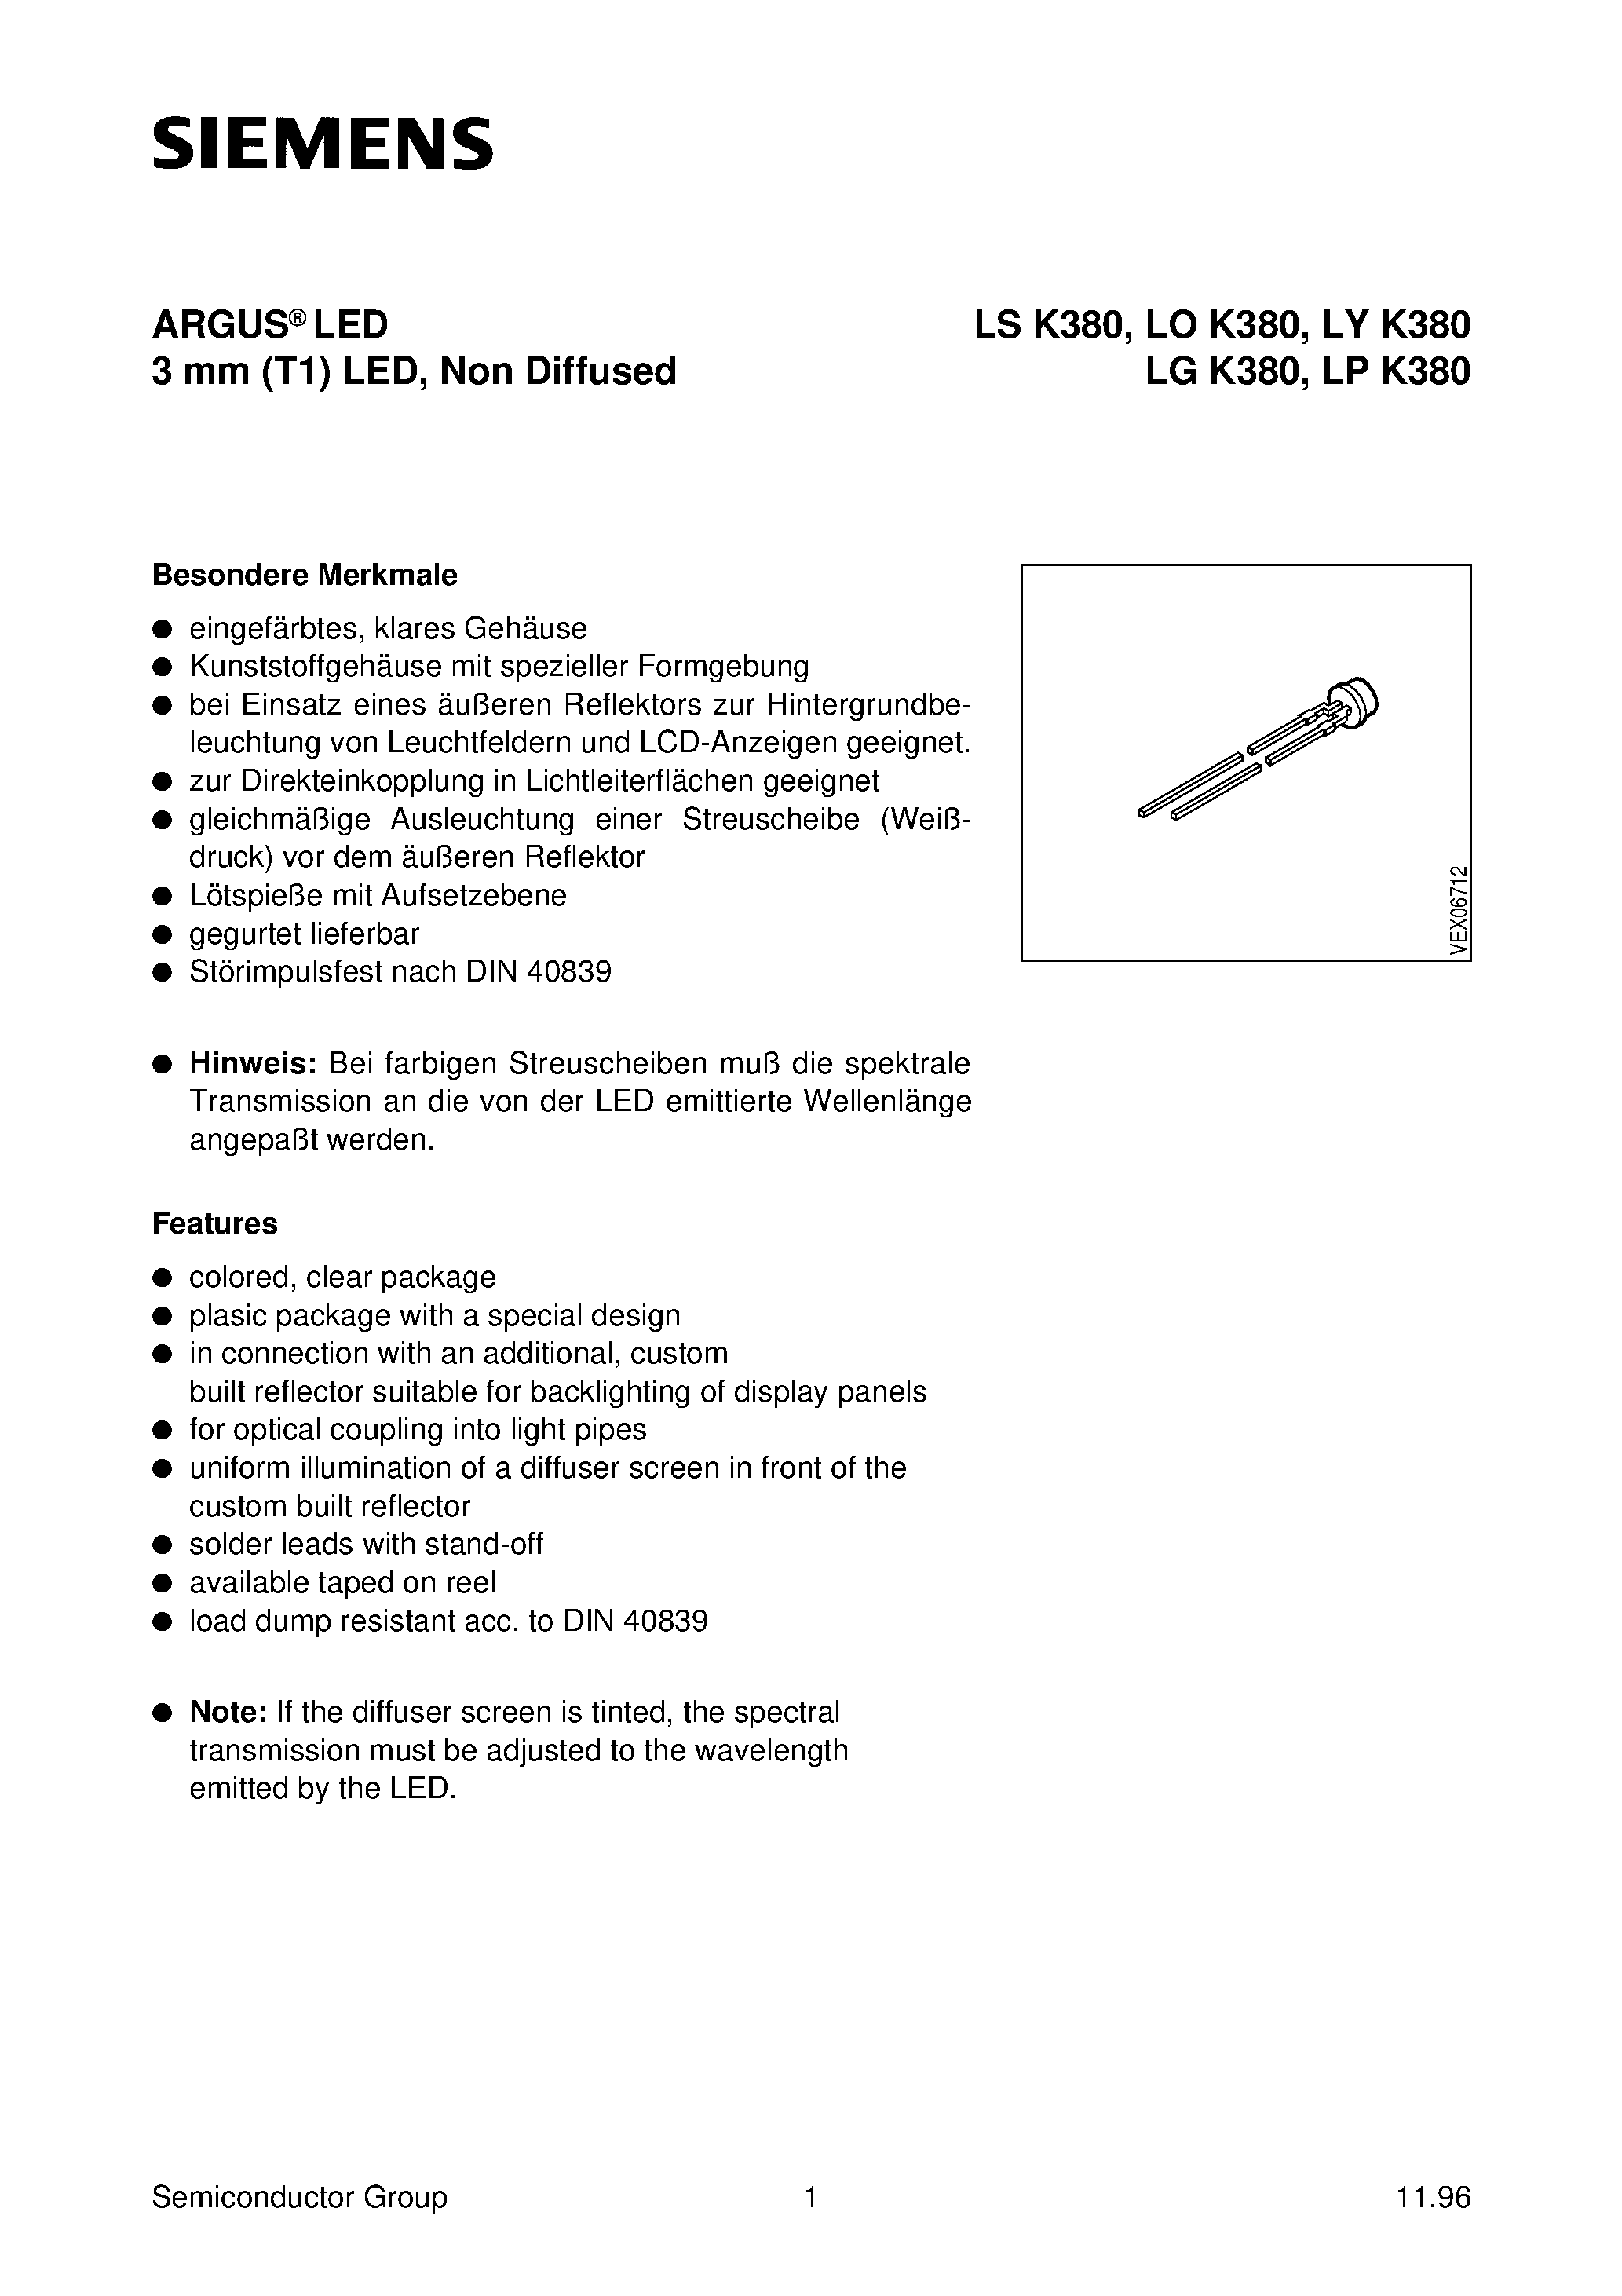 Даташит LSK380-Q - ARGUS LED 3 mm T1 LED / Non Diffused страница 1